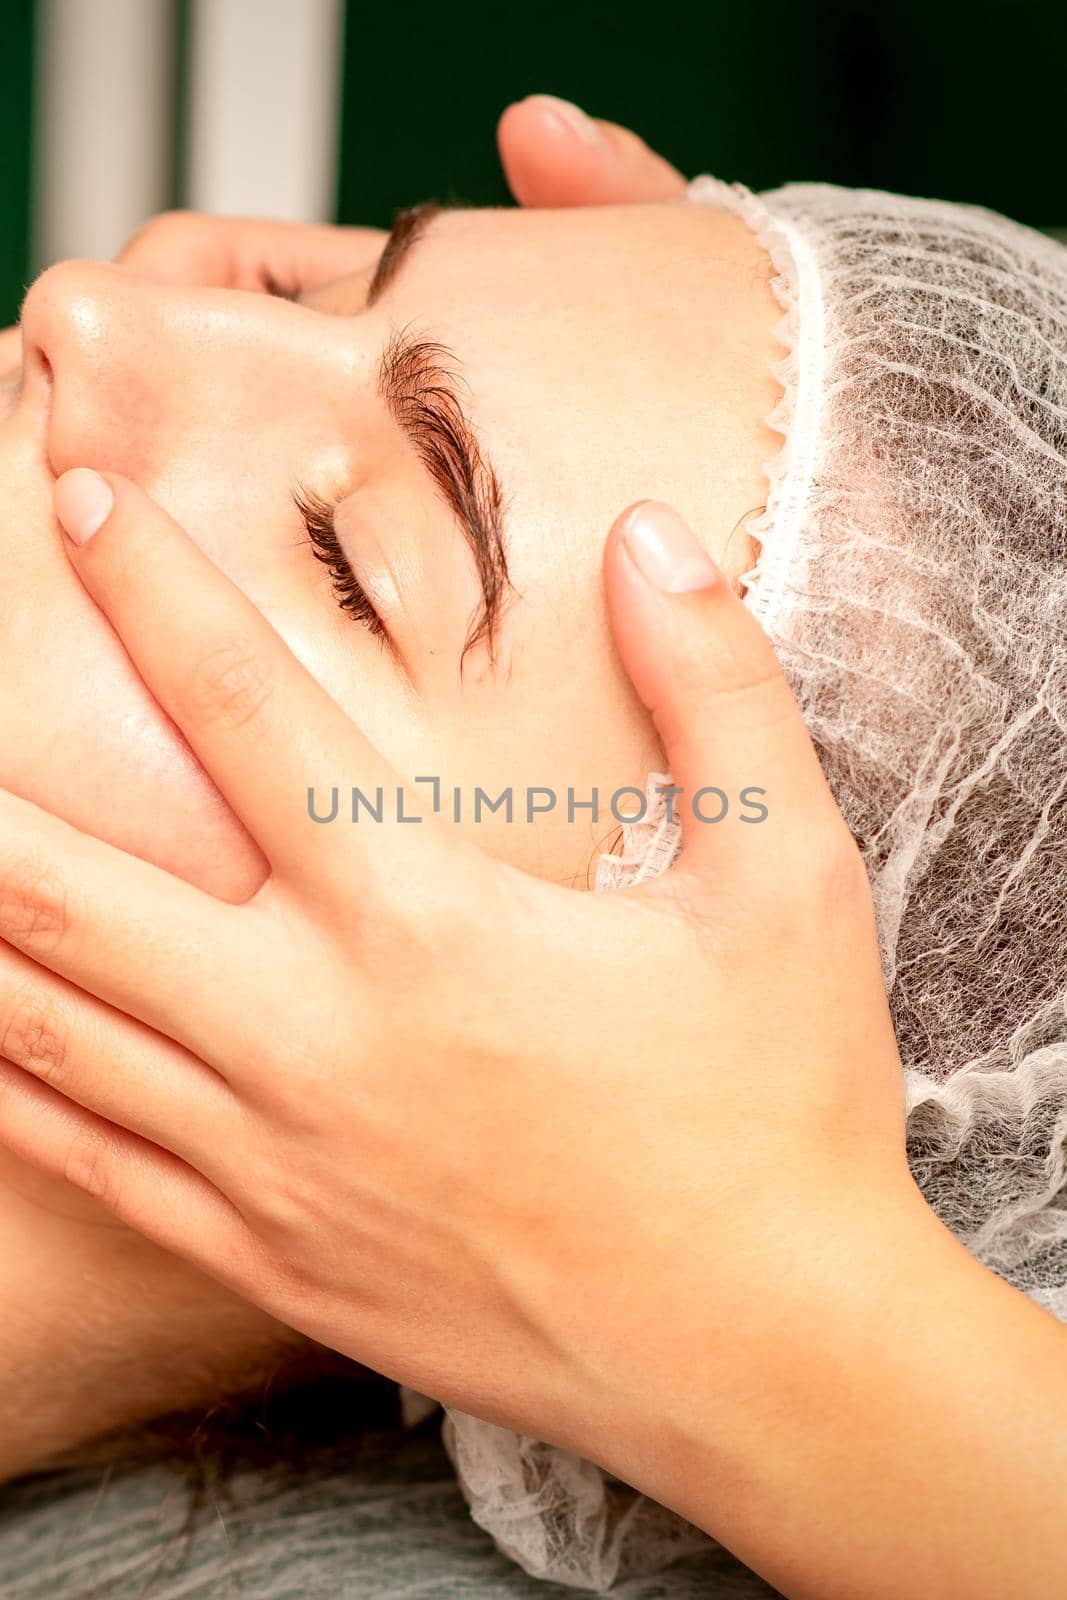 Beautiful young caucasian woman with closed eyes receiving a facial massage in a beauty salon. by okskukuruza